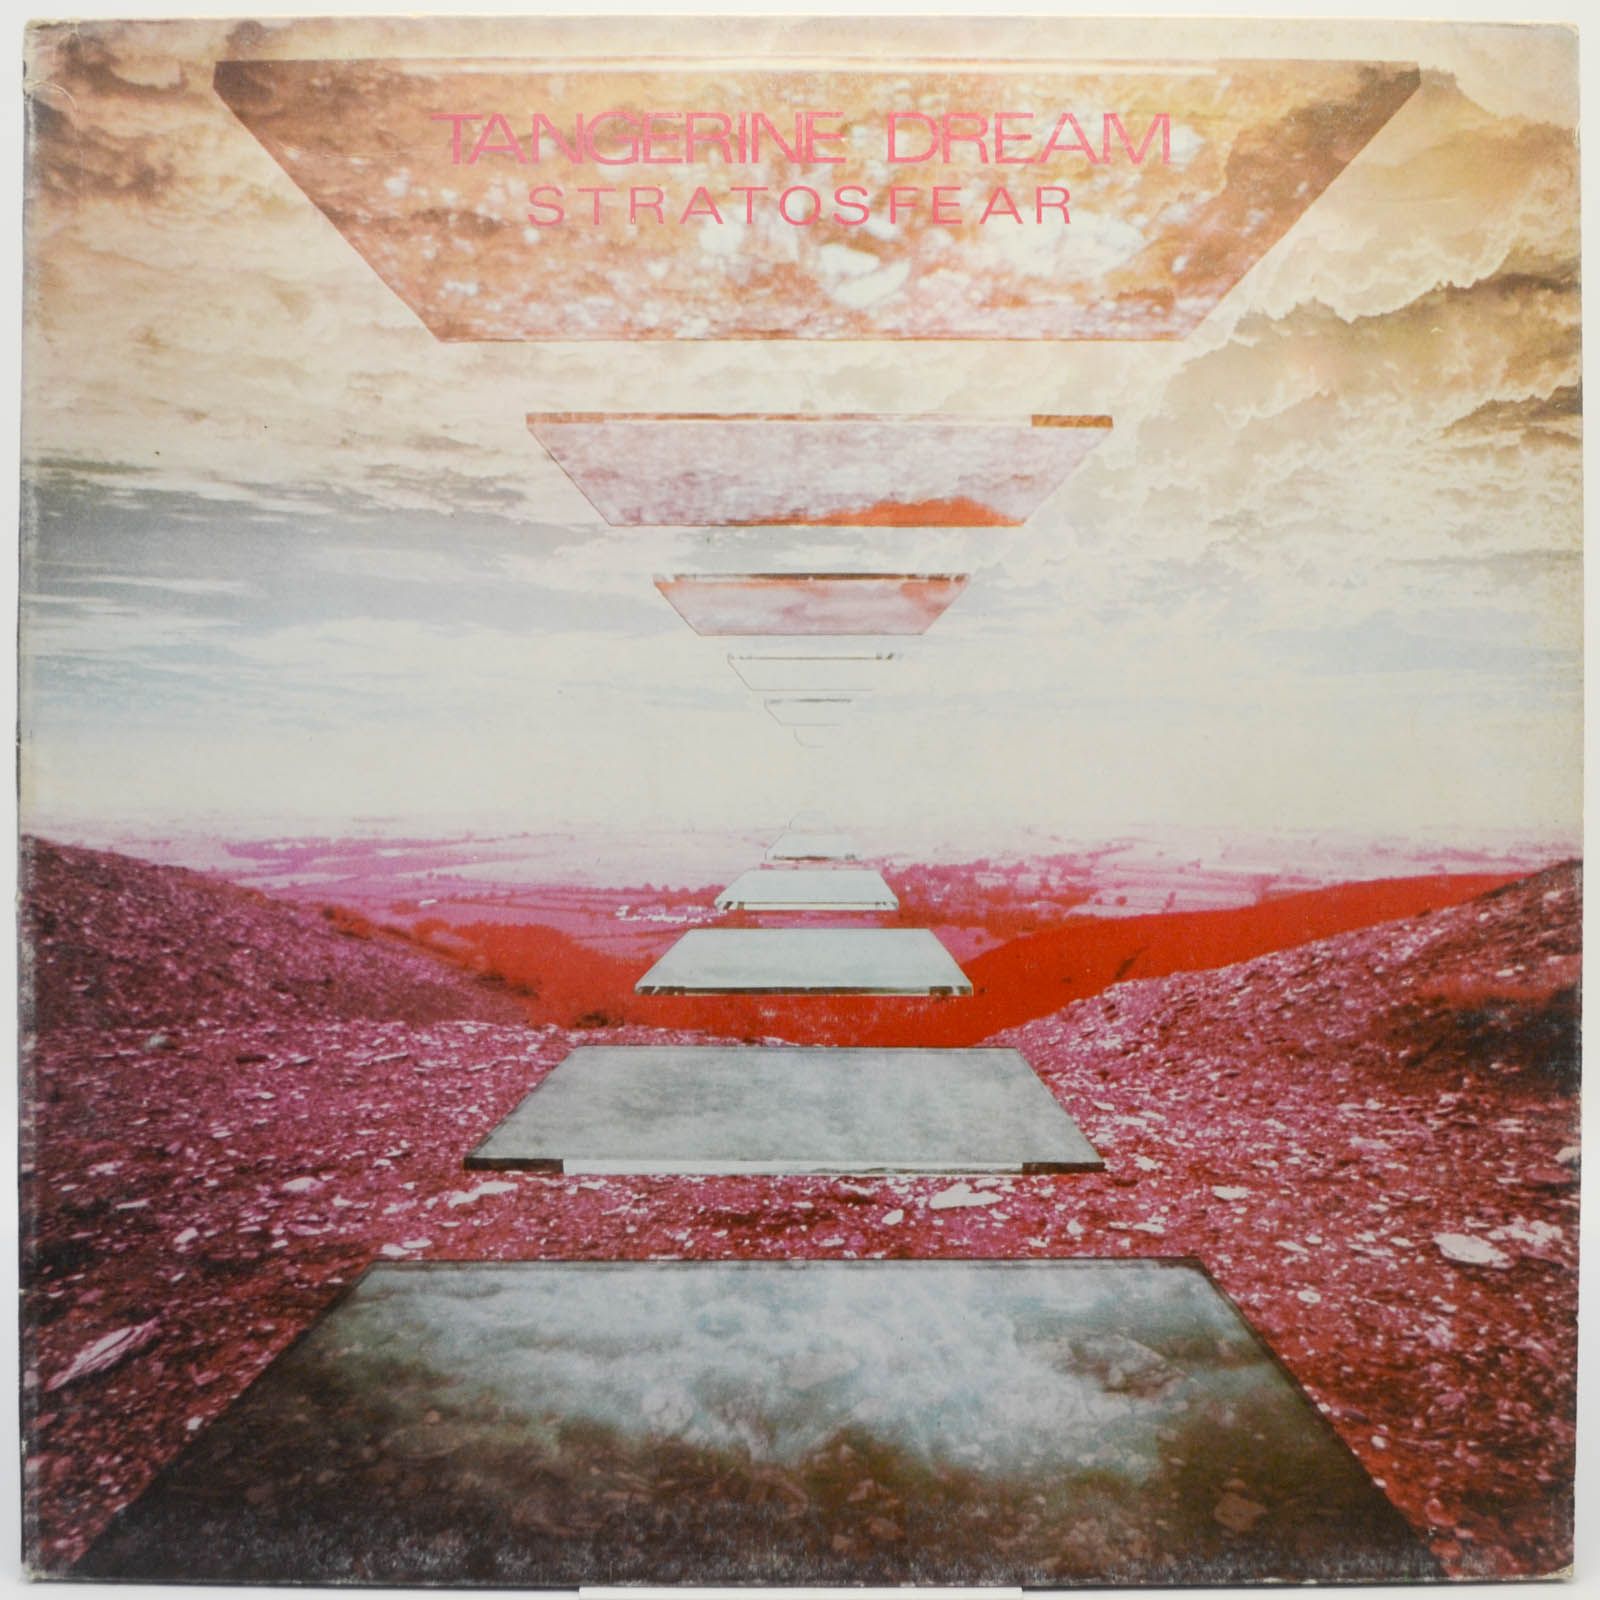 Tangerine Dream — Stratosfear, 1976